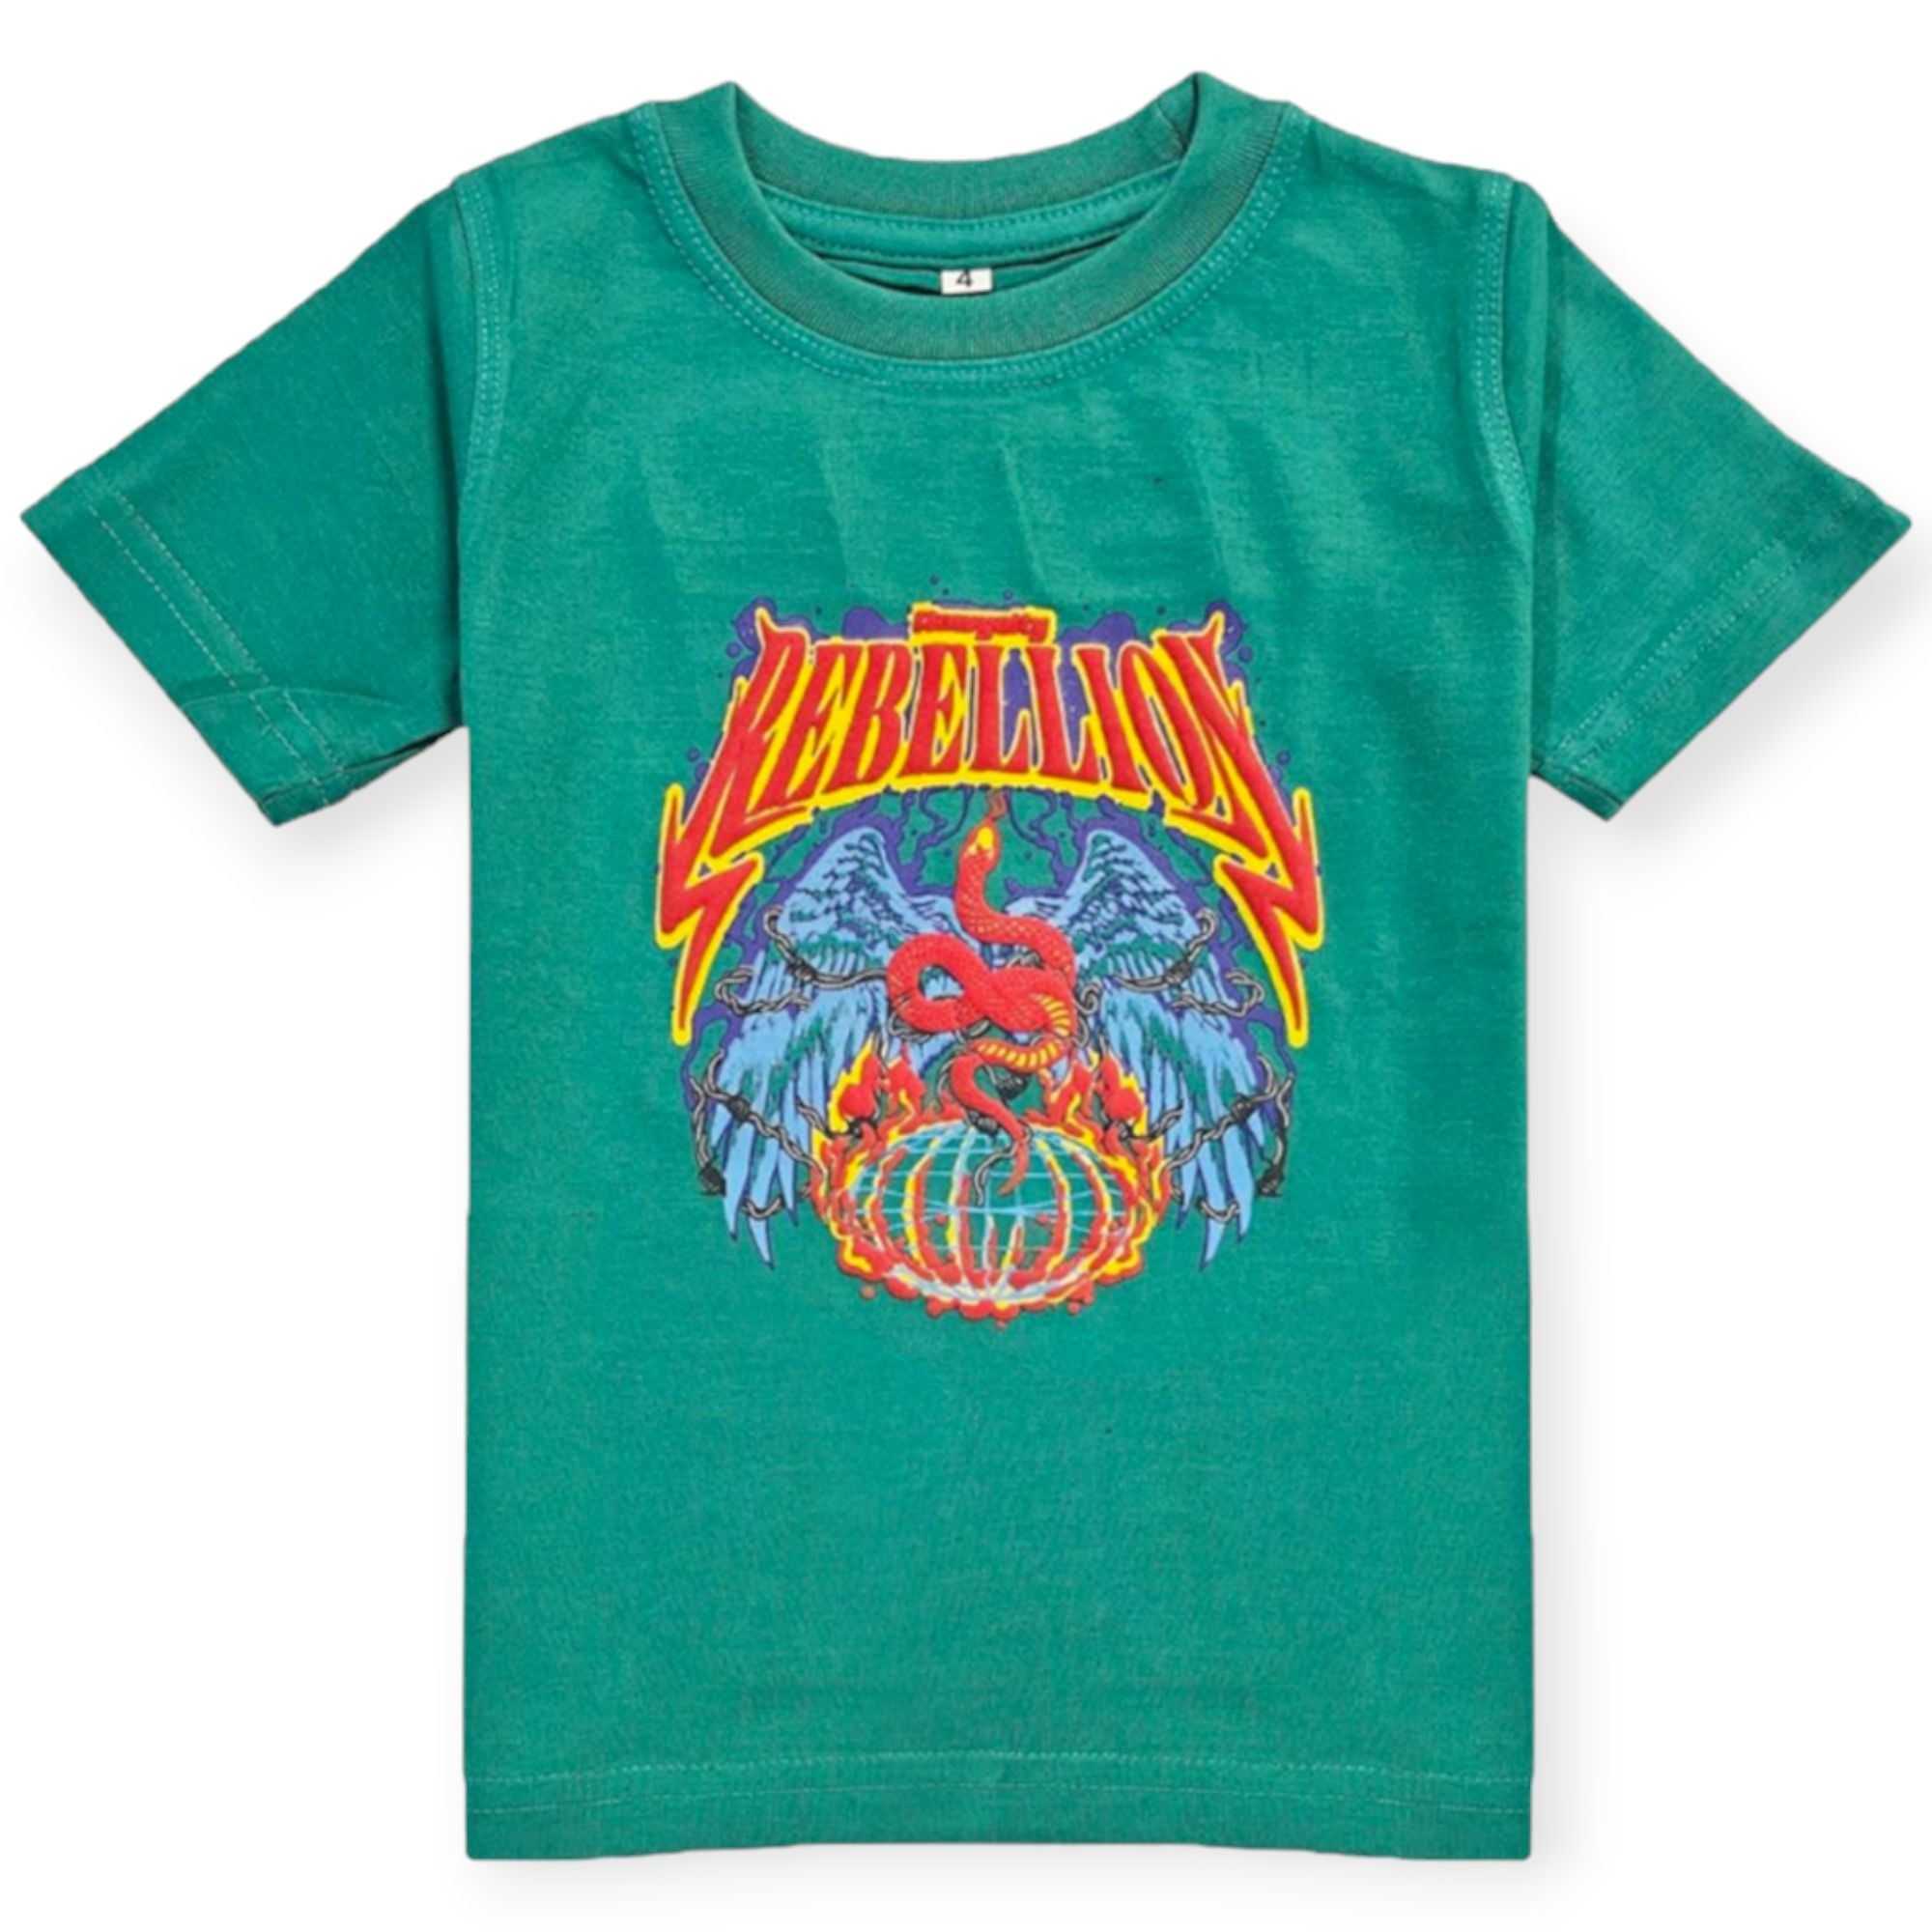 Rawyalty Apparel Kids Rebellion World Tour Puff Print Crew Neck T-Shirt (Green)-Green-2T-Nexus Clothing